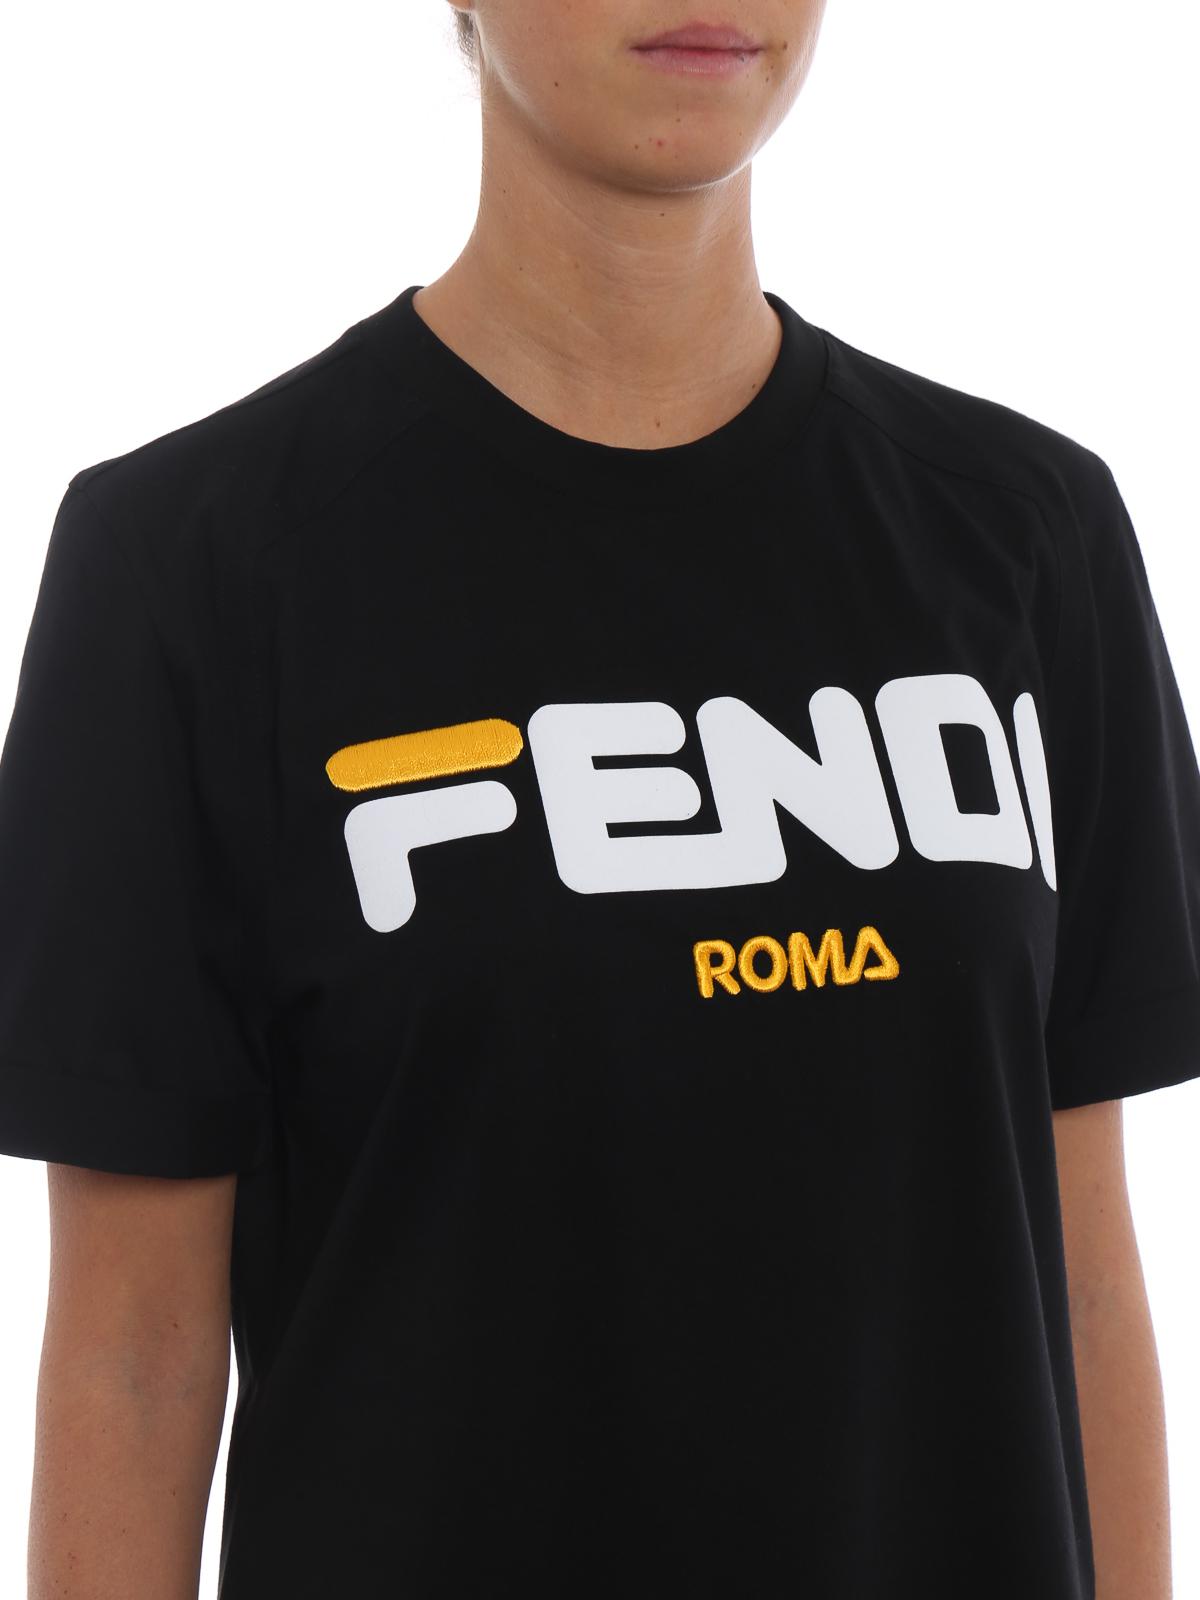 Fila Fendi T Shirt Shop, 40% OFF | www.enaco.com.pe